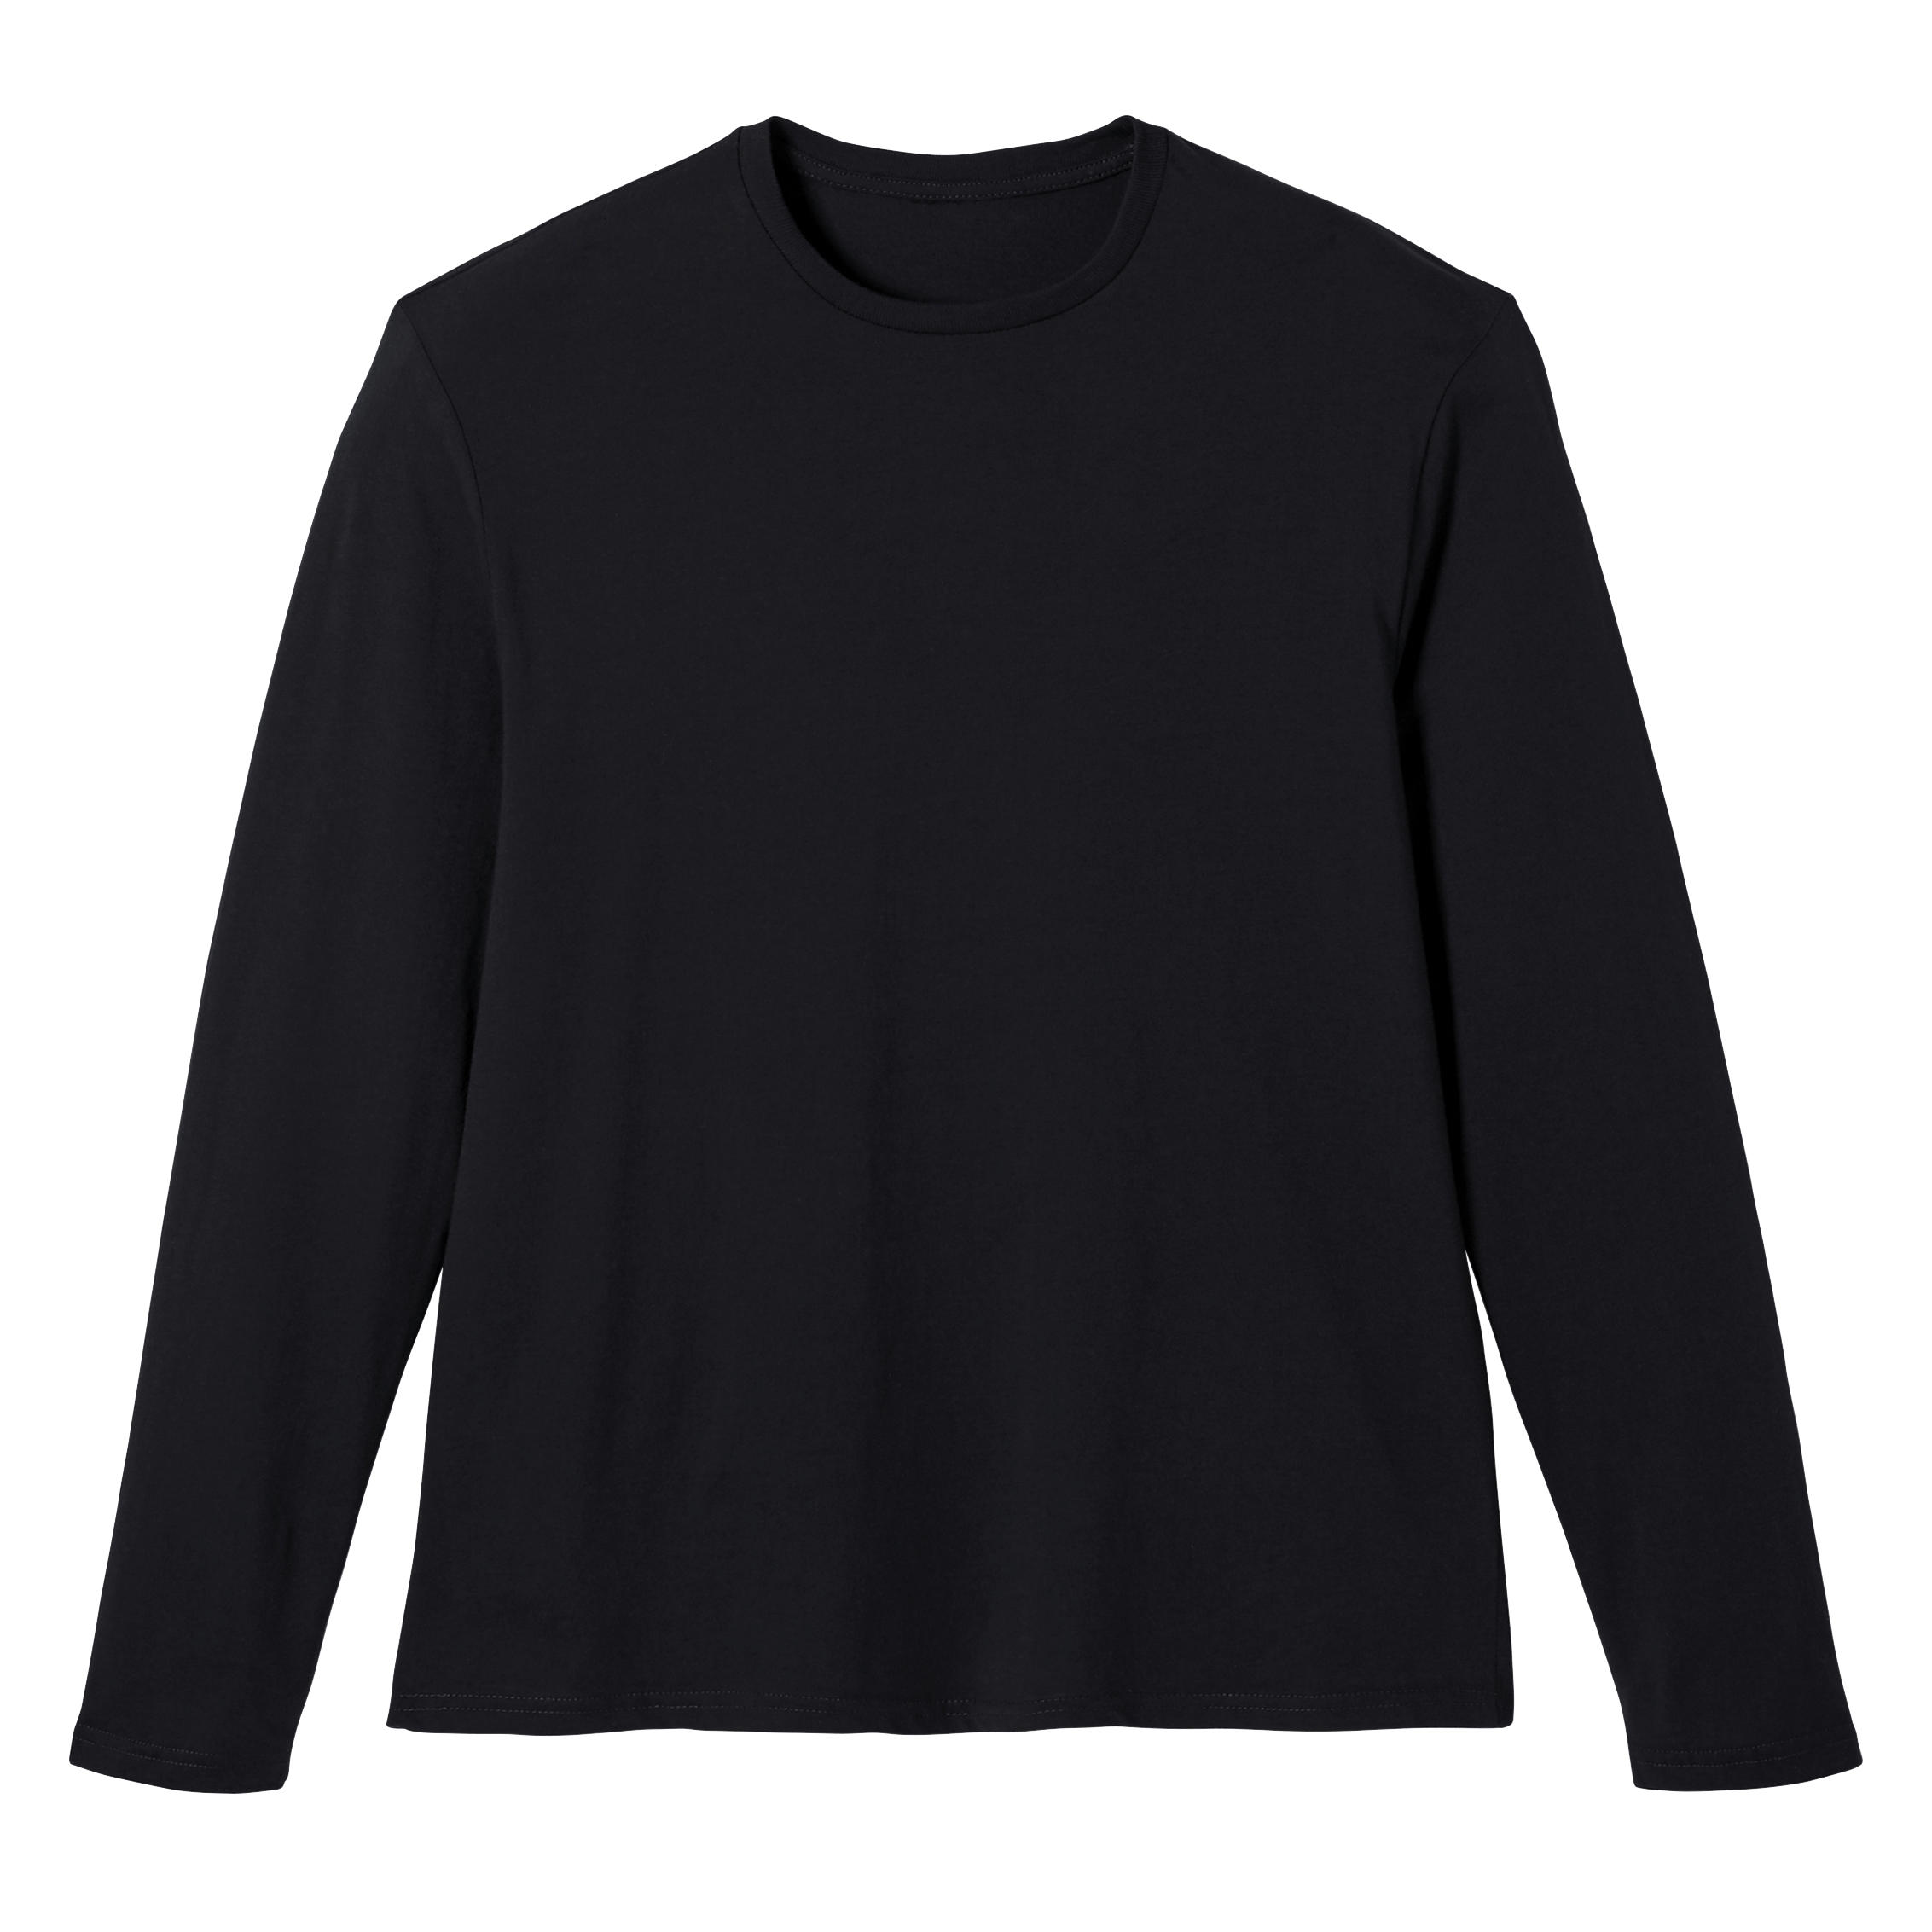 Men's Long-Sleeved Straight-Cut Crew Neck Cotton Fitness T-Shirt 100 - Black 5/6